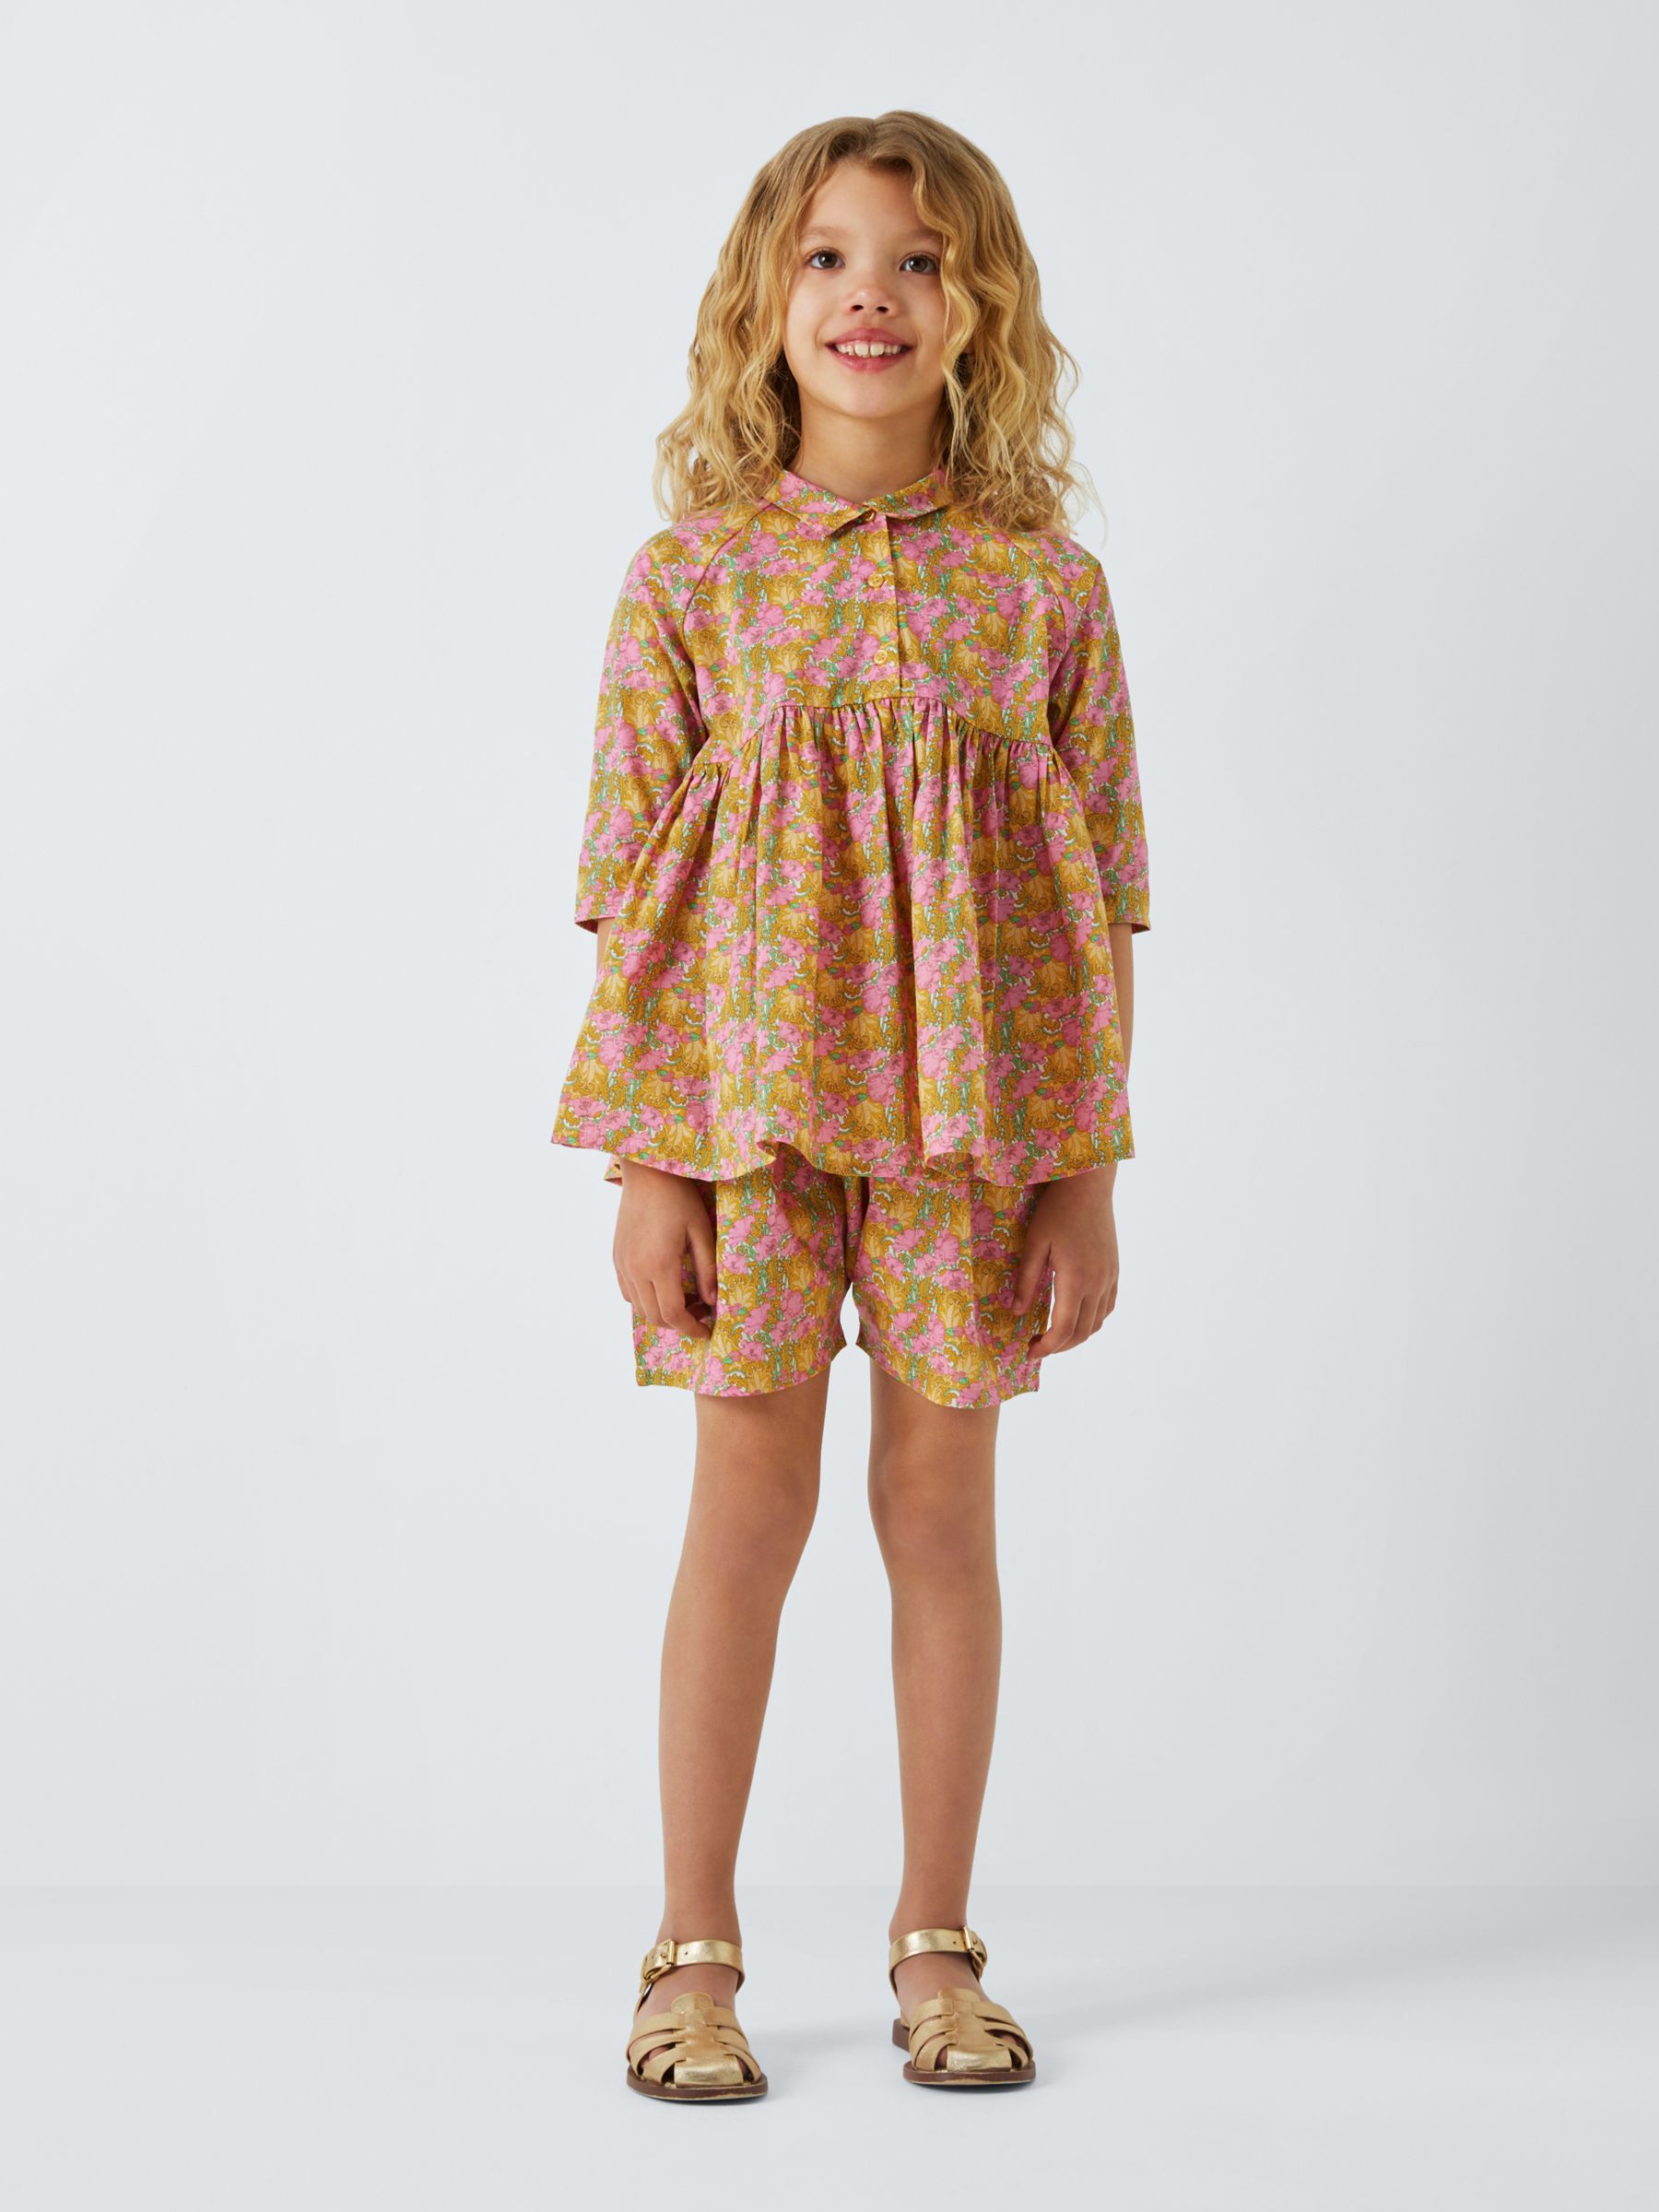 Buy Caramel Kids' Lovage Liberty Print Shorts, Pink/Multi Online at johnlewis.com